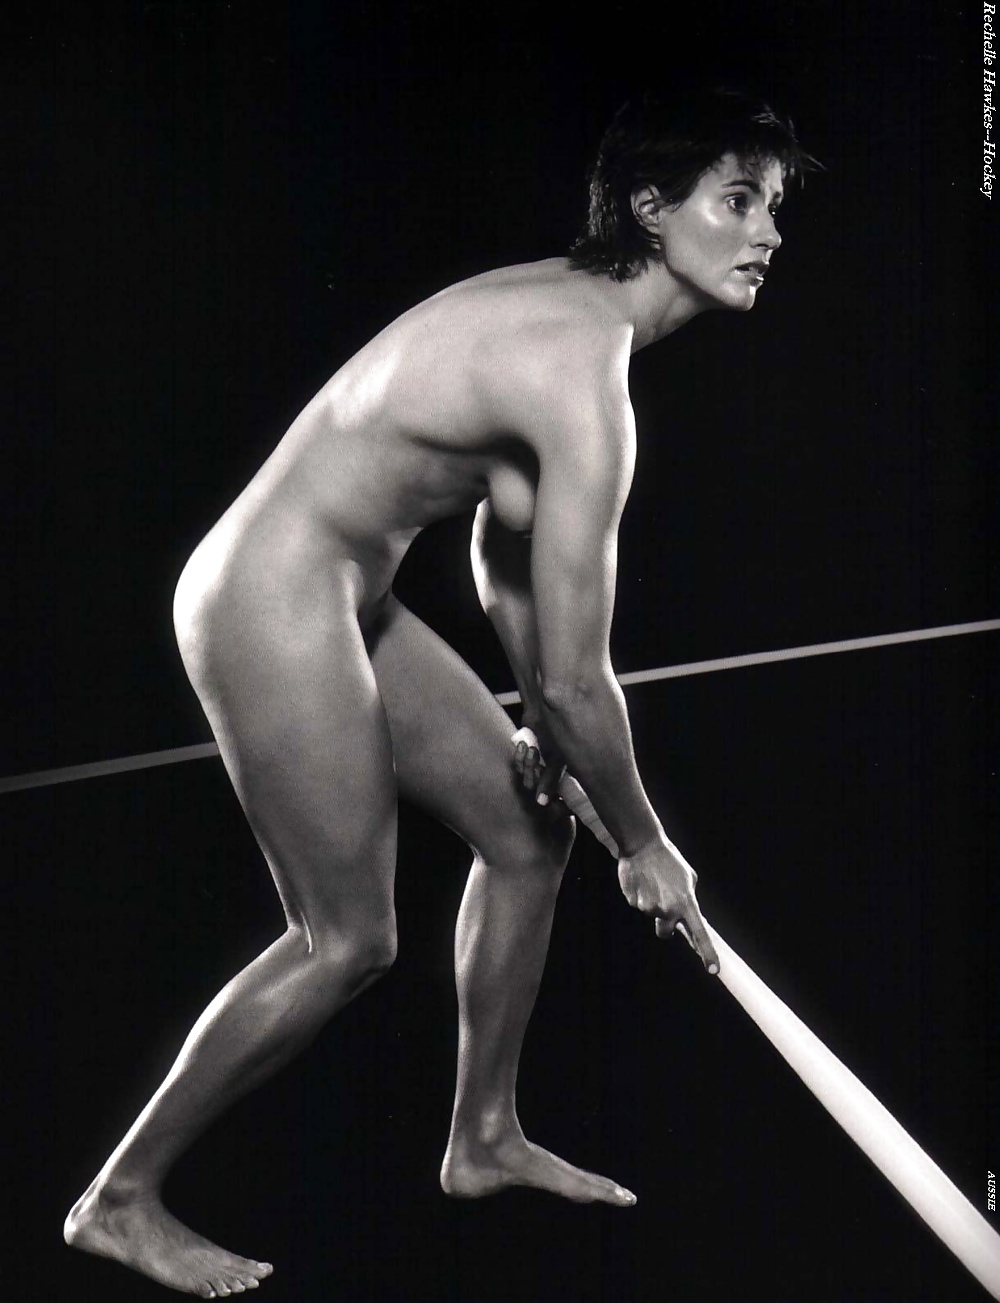 Australiane nude olimpioniche 2000
 #27683111